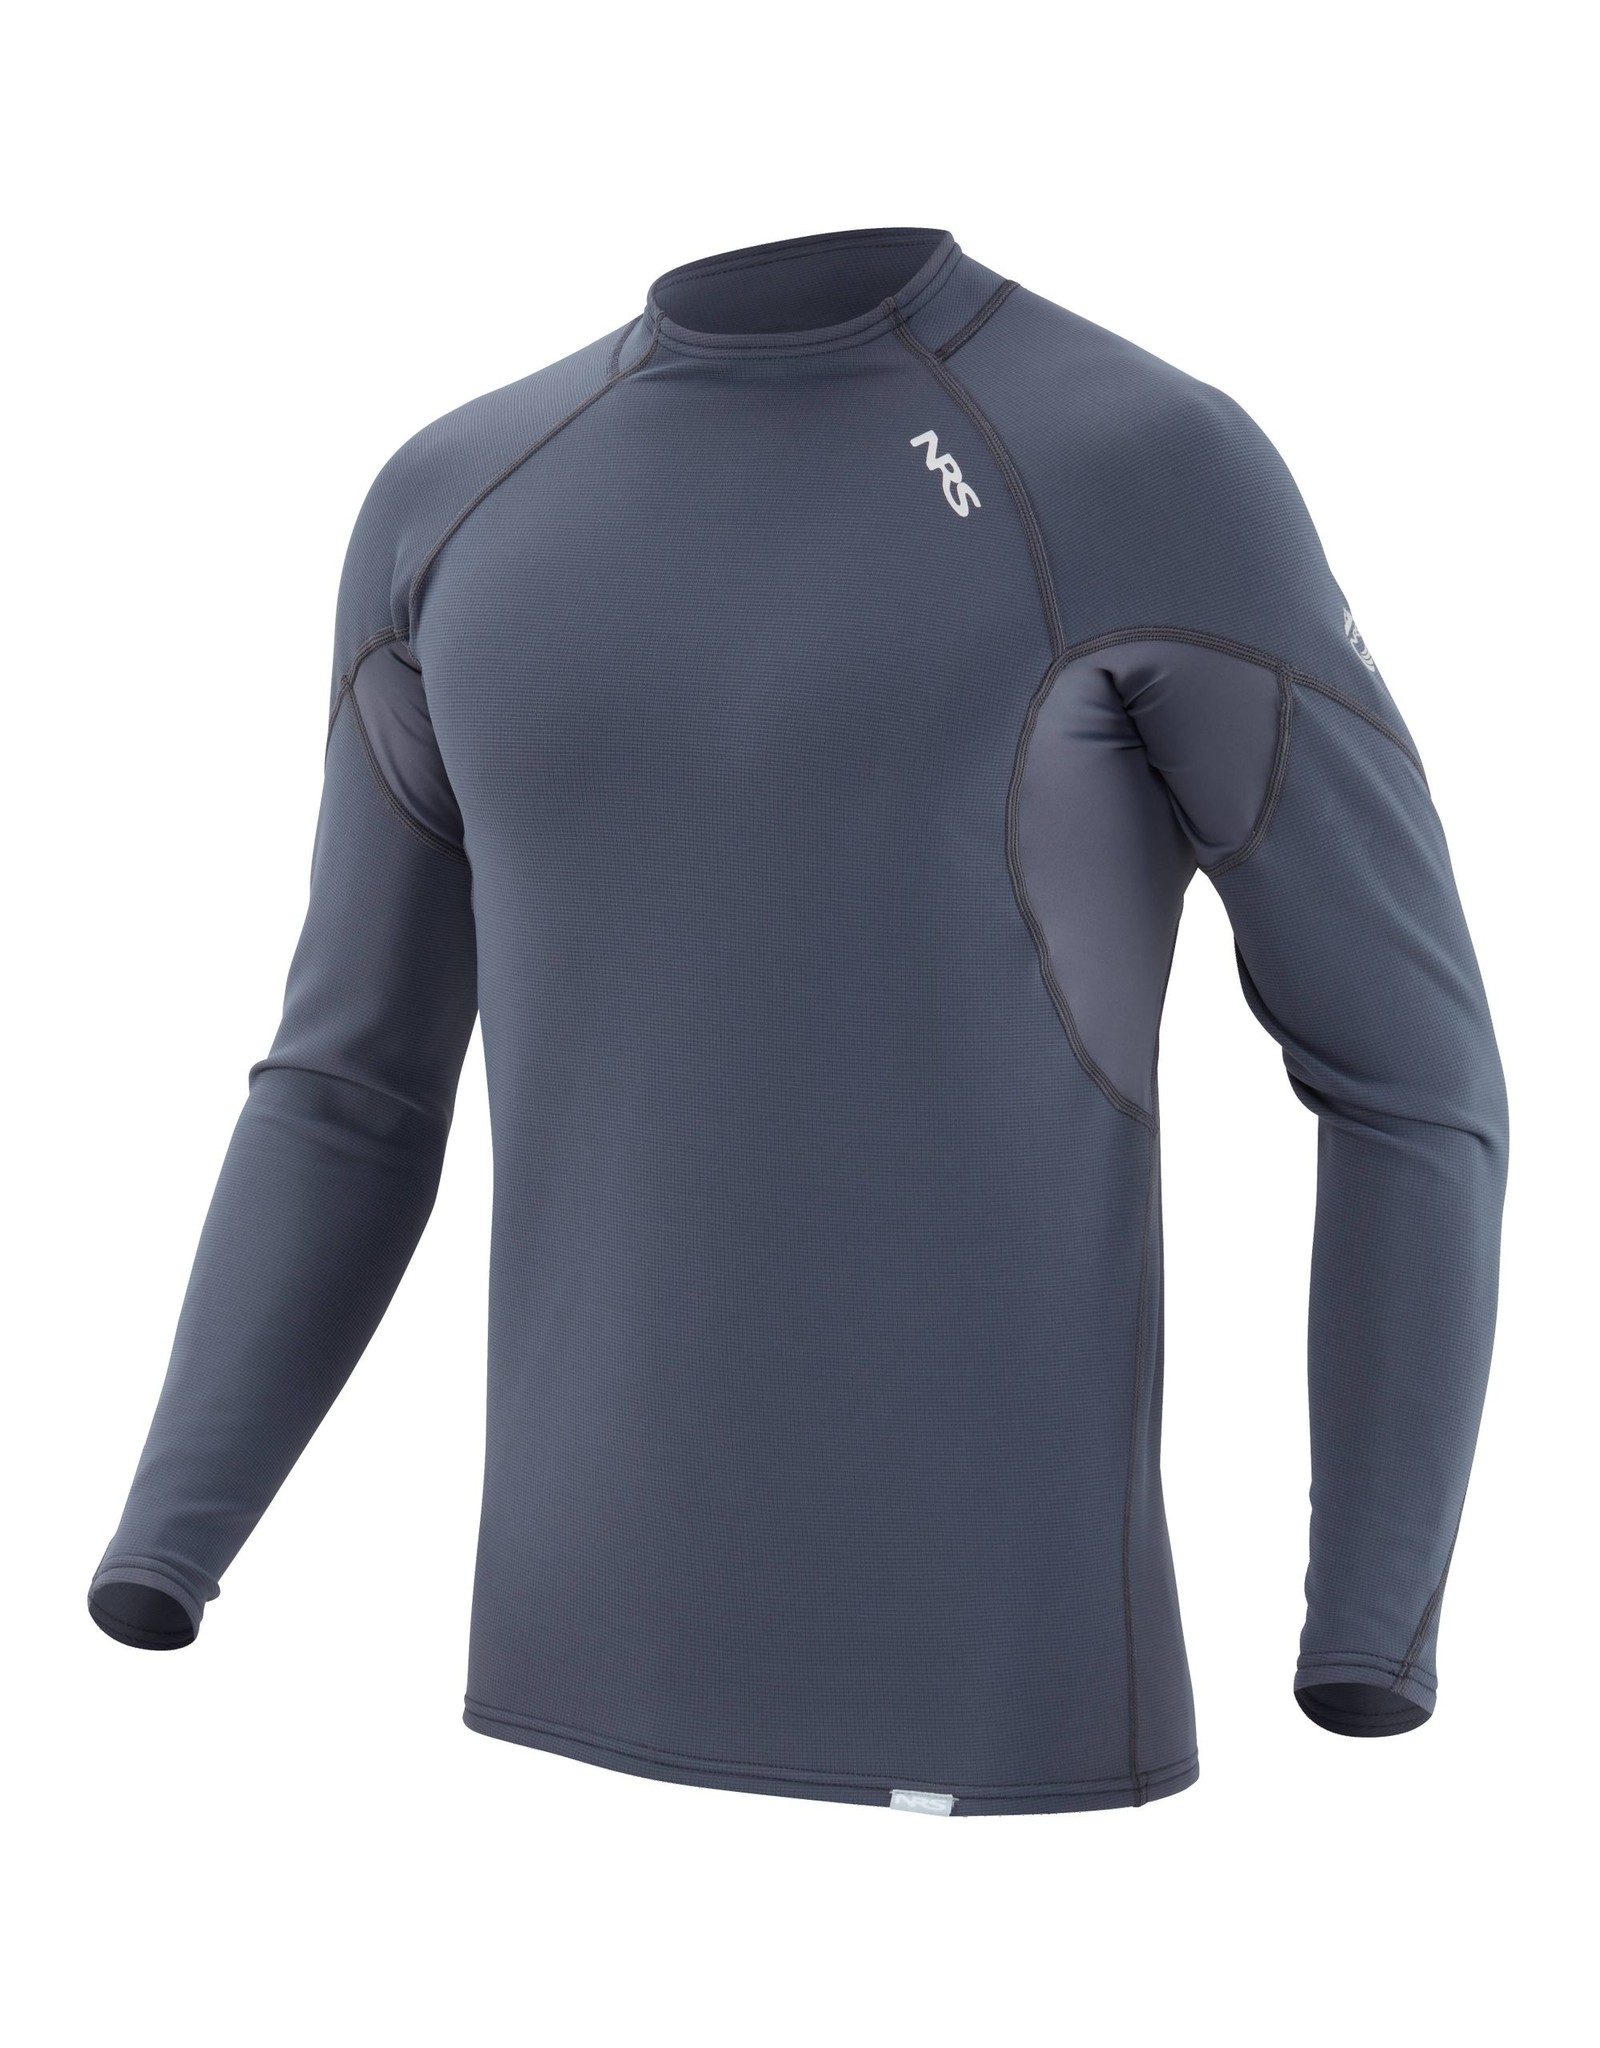 NRS NRS Men's HydroSkin 0.5 Long-Sleeve Shirt - Closeout